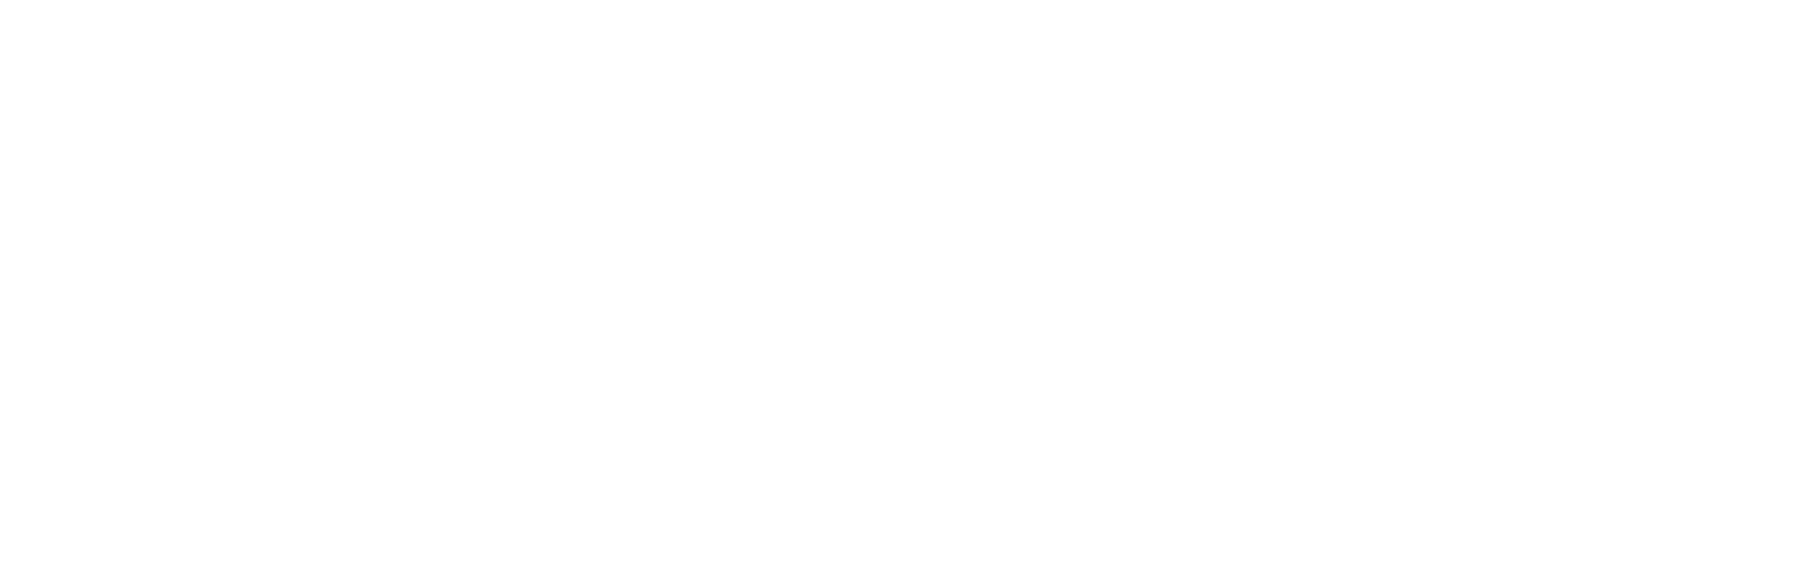 1800 Violins Logo